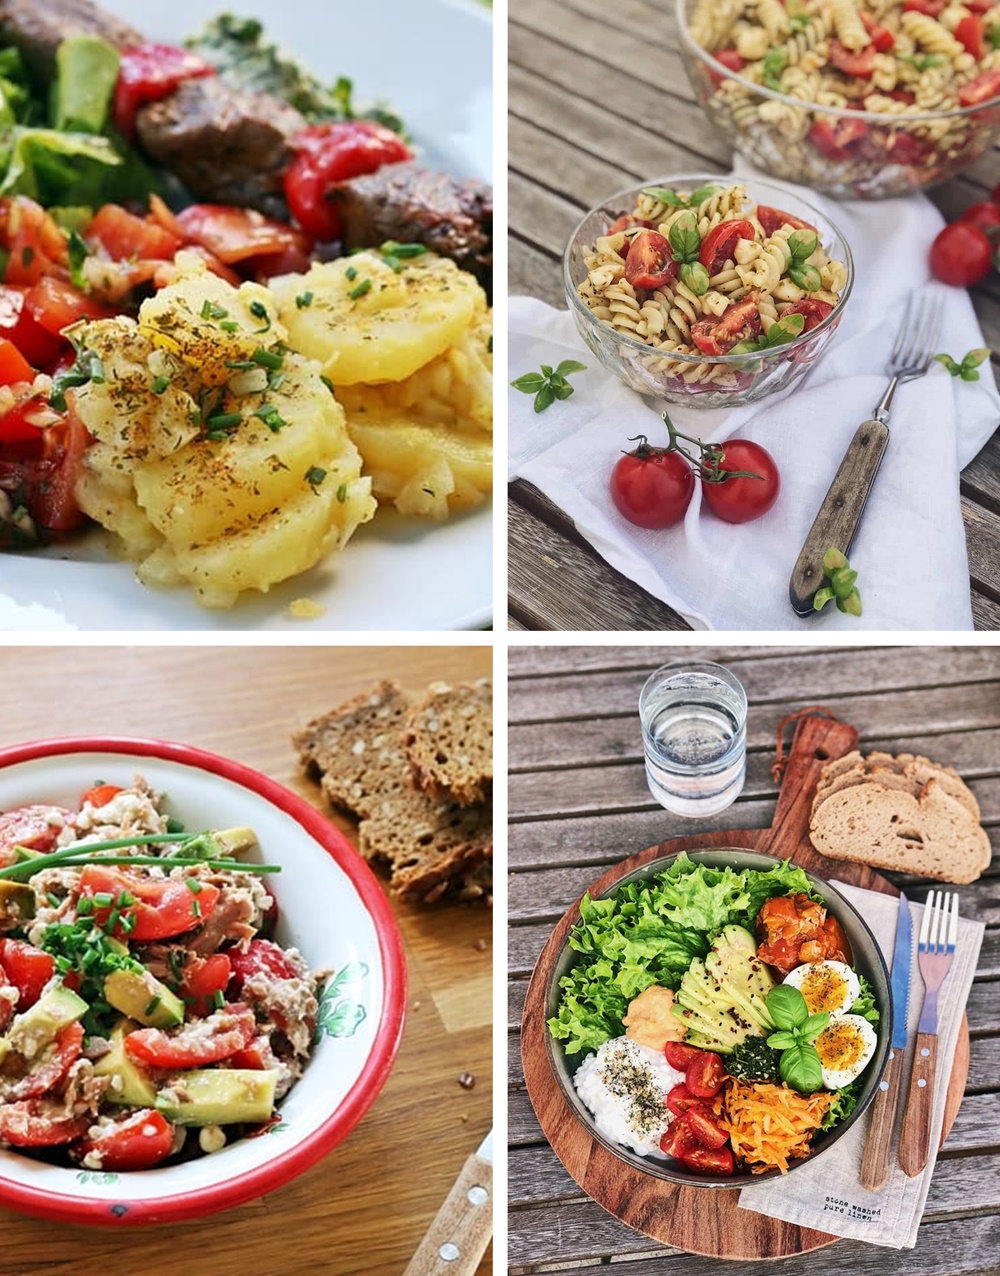 Die besten Brote, Salate, Snacks & Drinks für die Grillsaison salat nudelsalat salatbowl kartoffelsalat